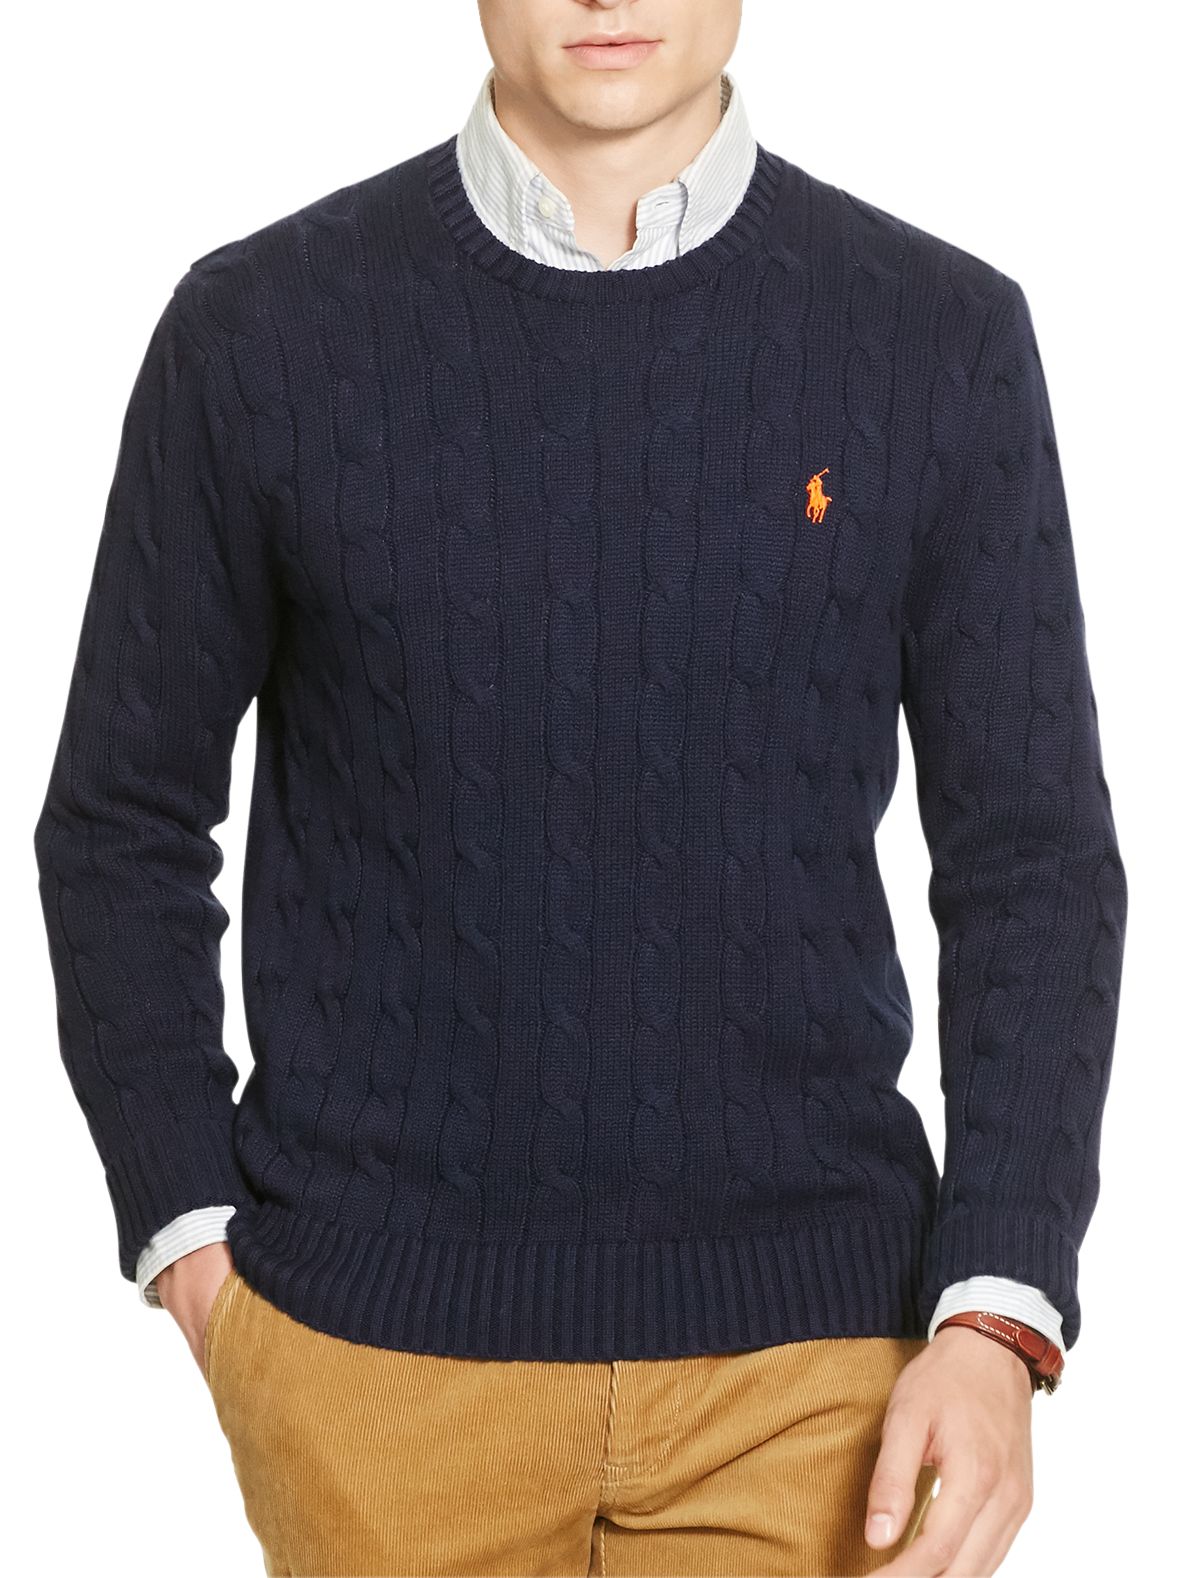 polo ralph lauren navy sweater